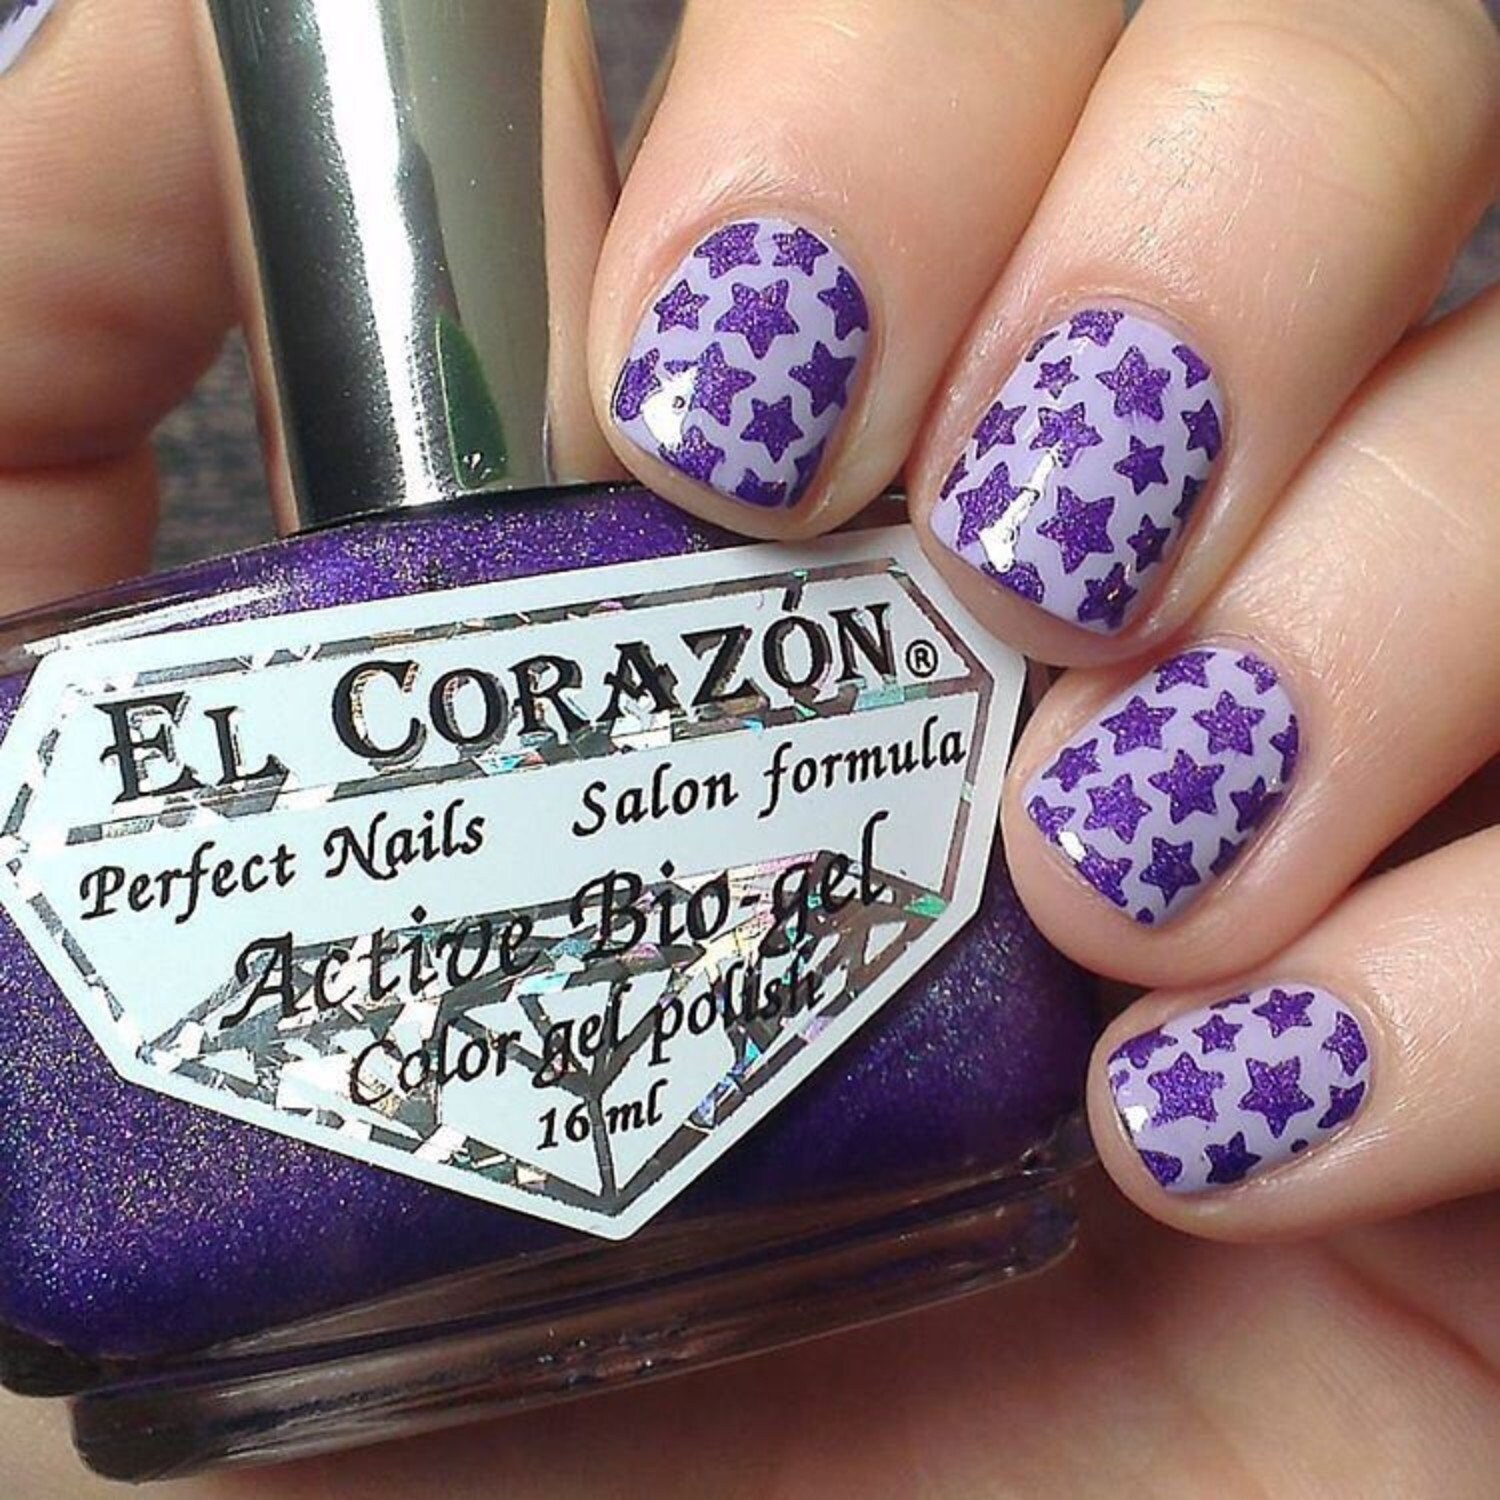 El Corazon Aquarelle Tints + Stamping Polish Review, Nail Art